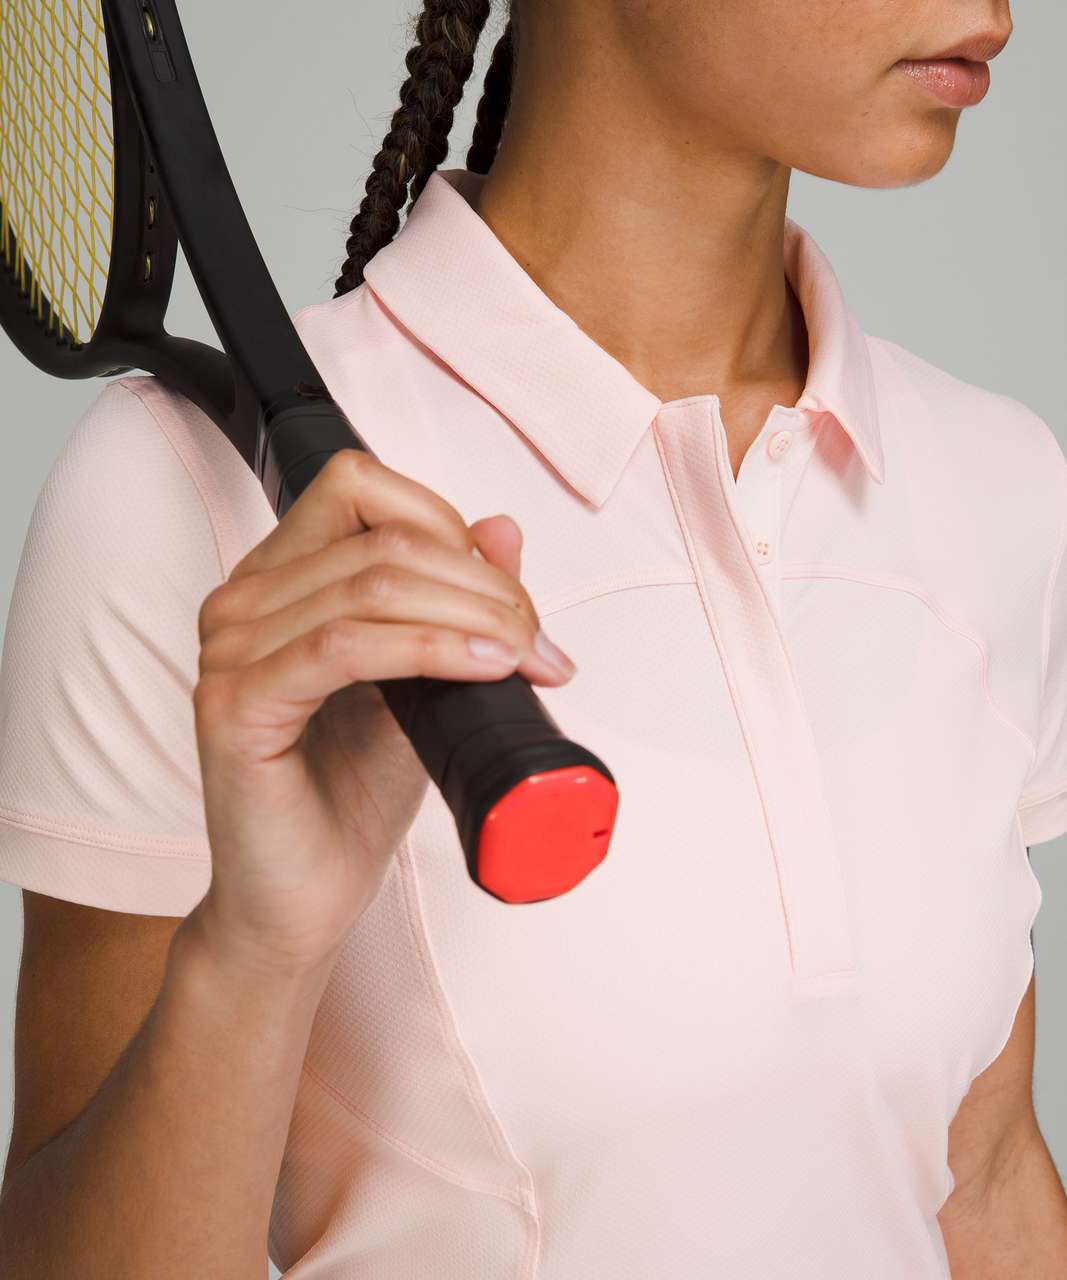 Lululemon Quick-Drying Short Sleeve Polo Shirt - Strawberry Milkshake